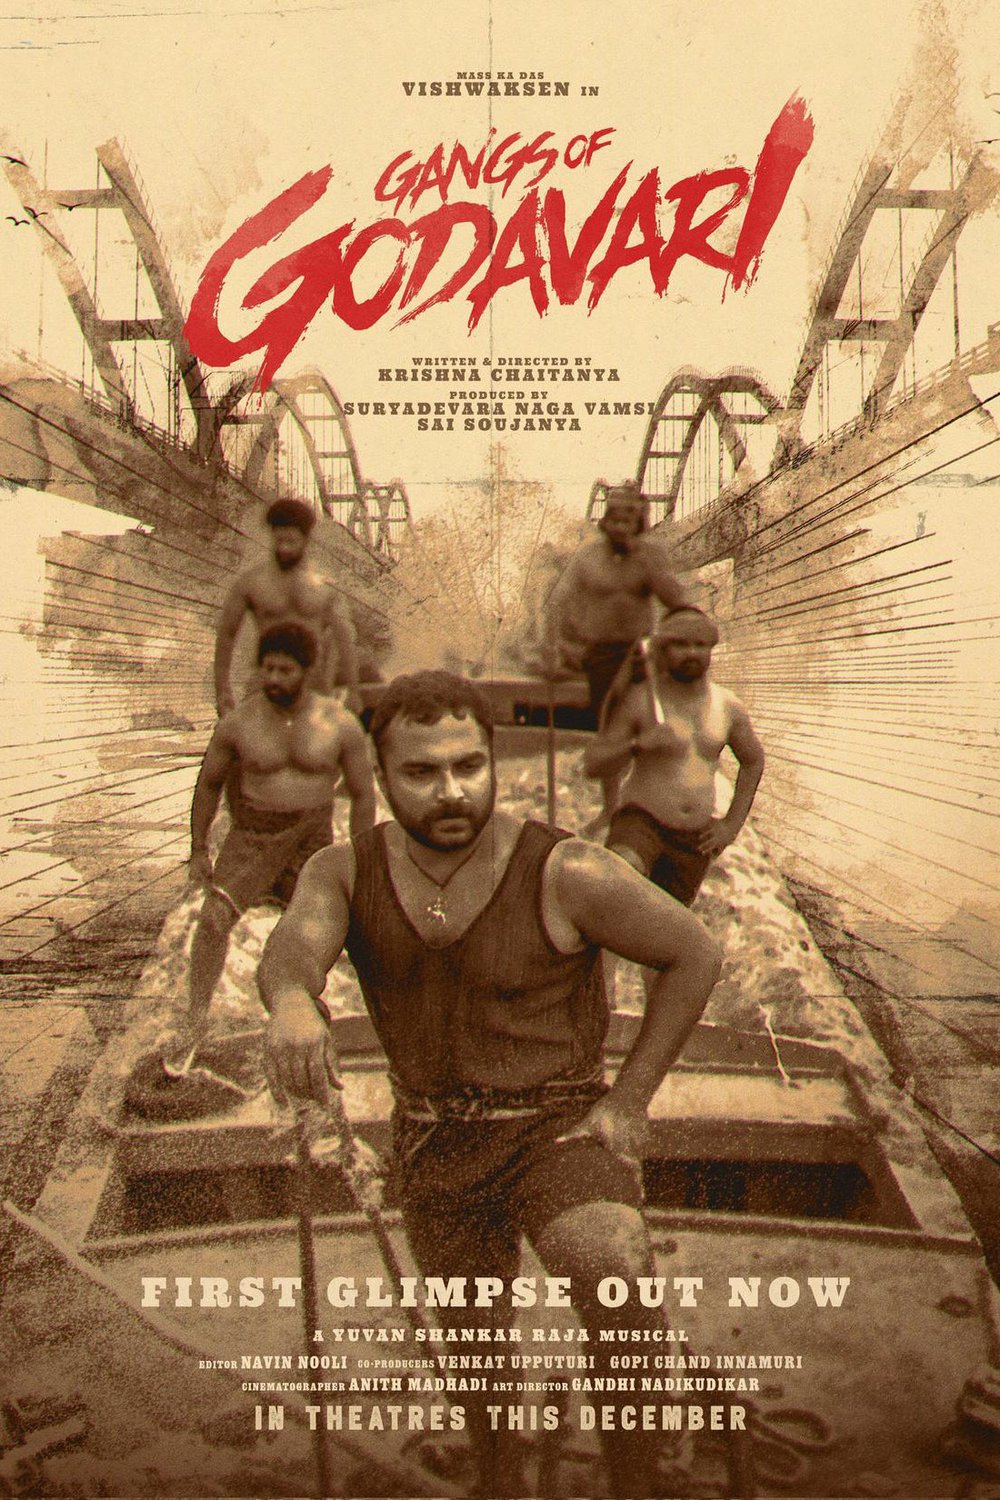 Telugu poster of the movie Gangs of Godavari